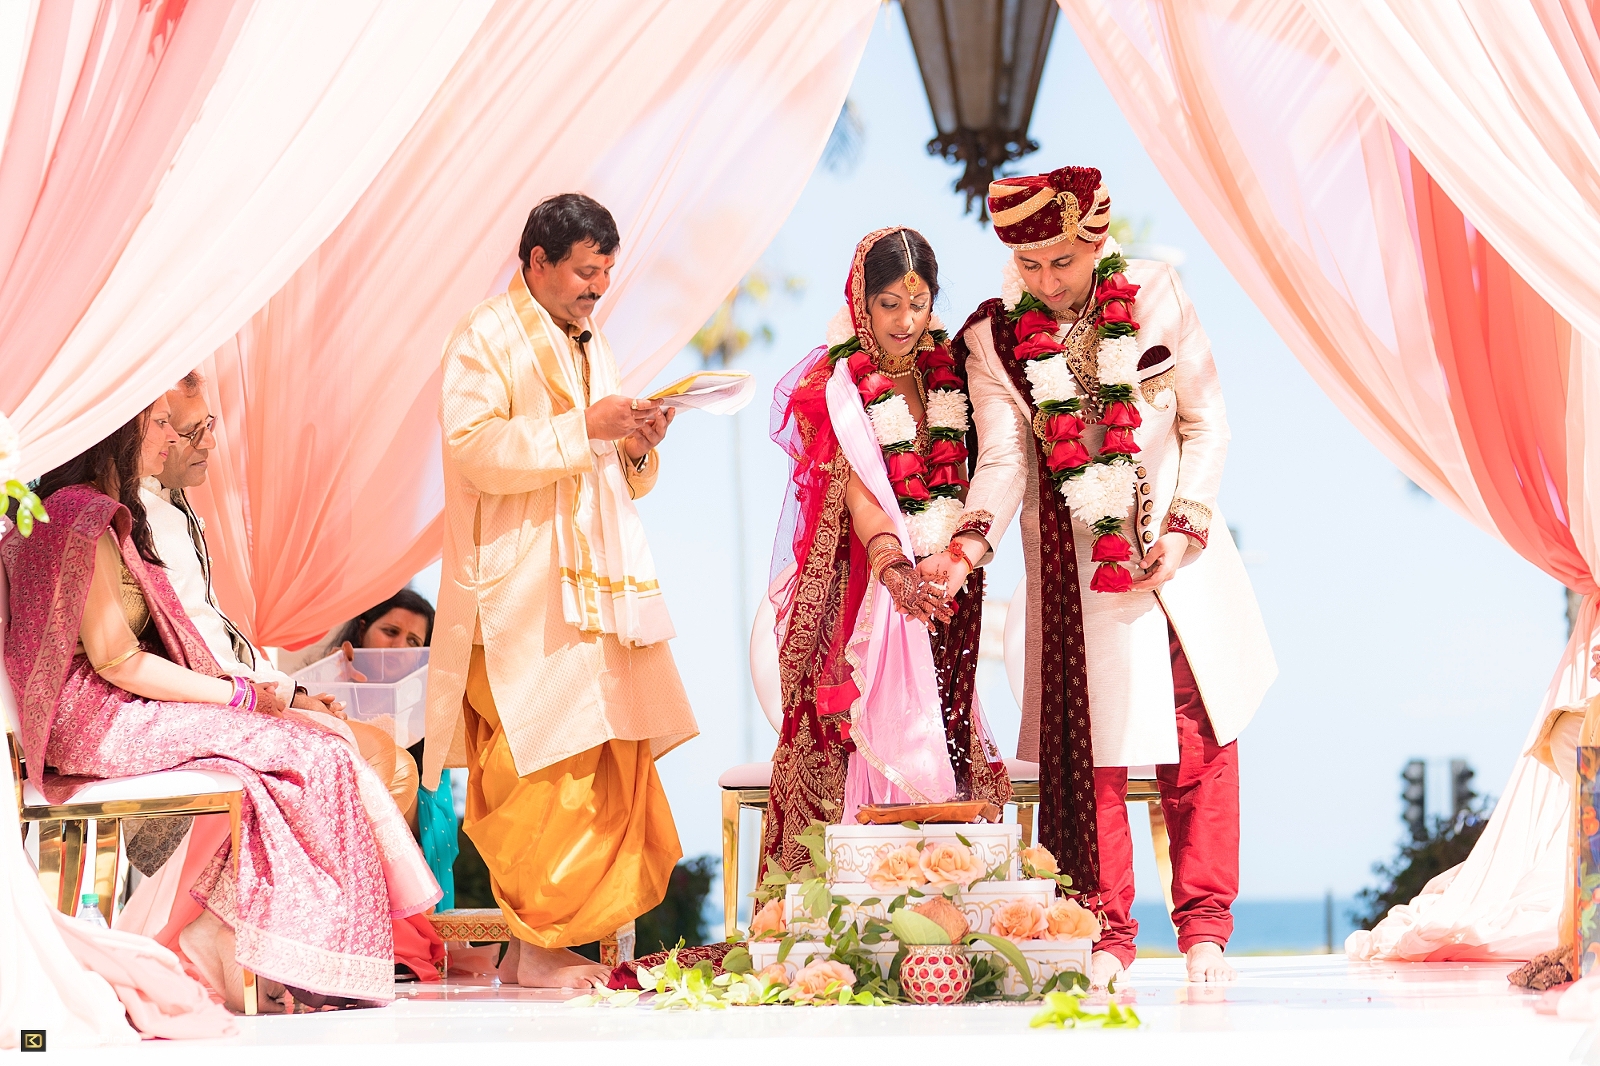 Jai Mala Indian wedding at Hilton Santa Barbara